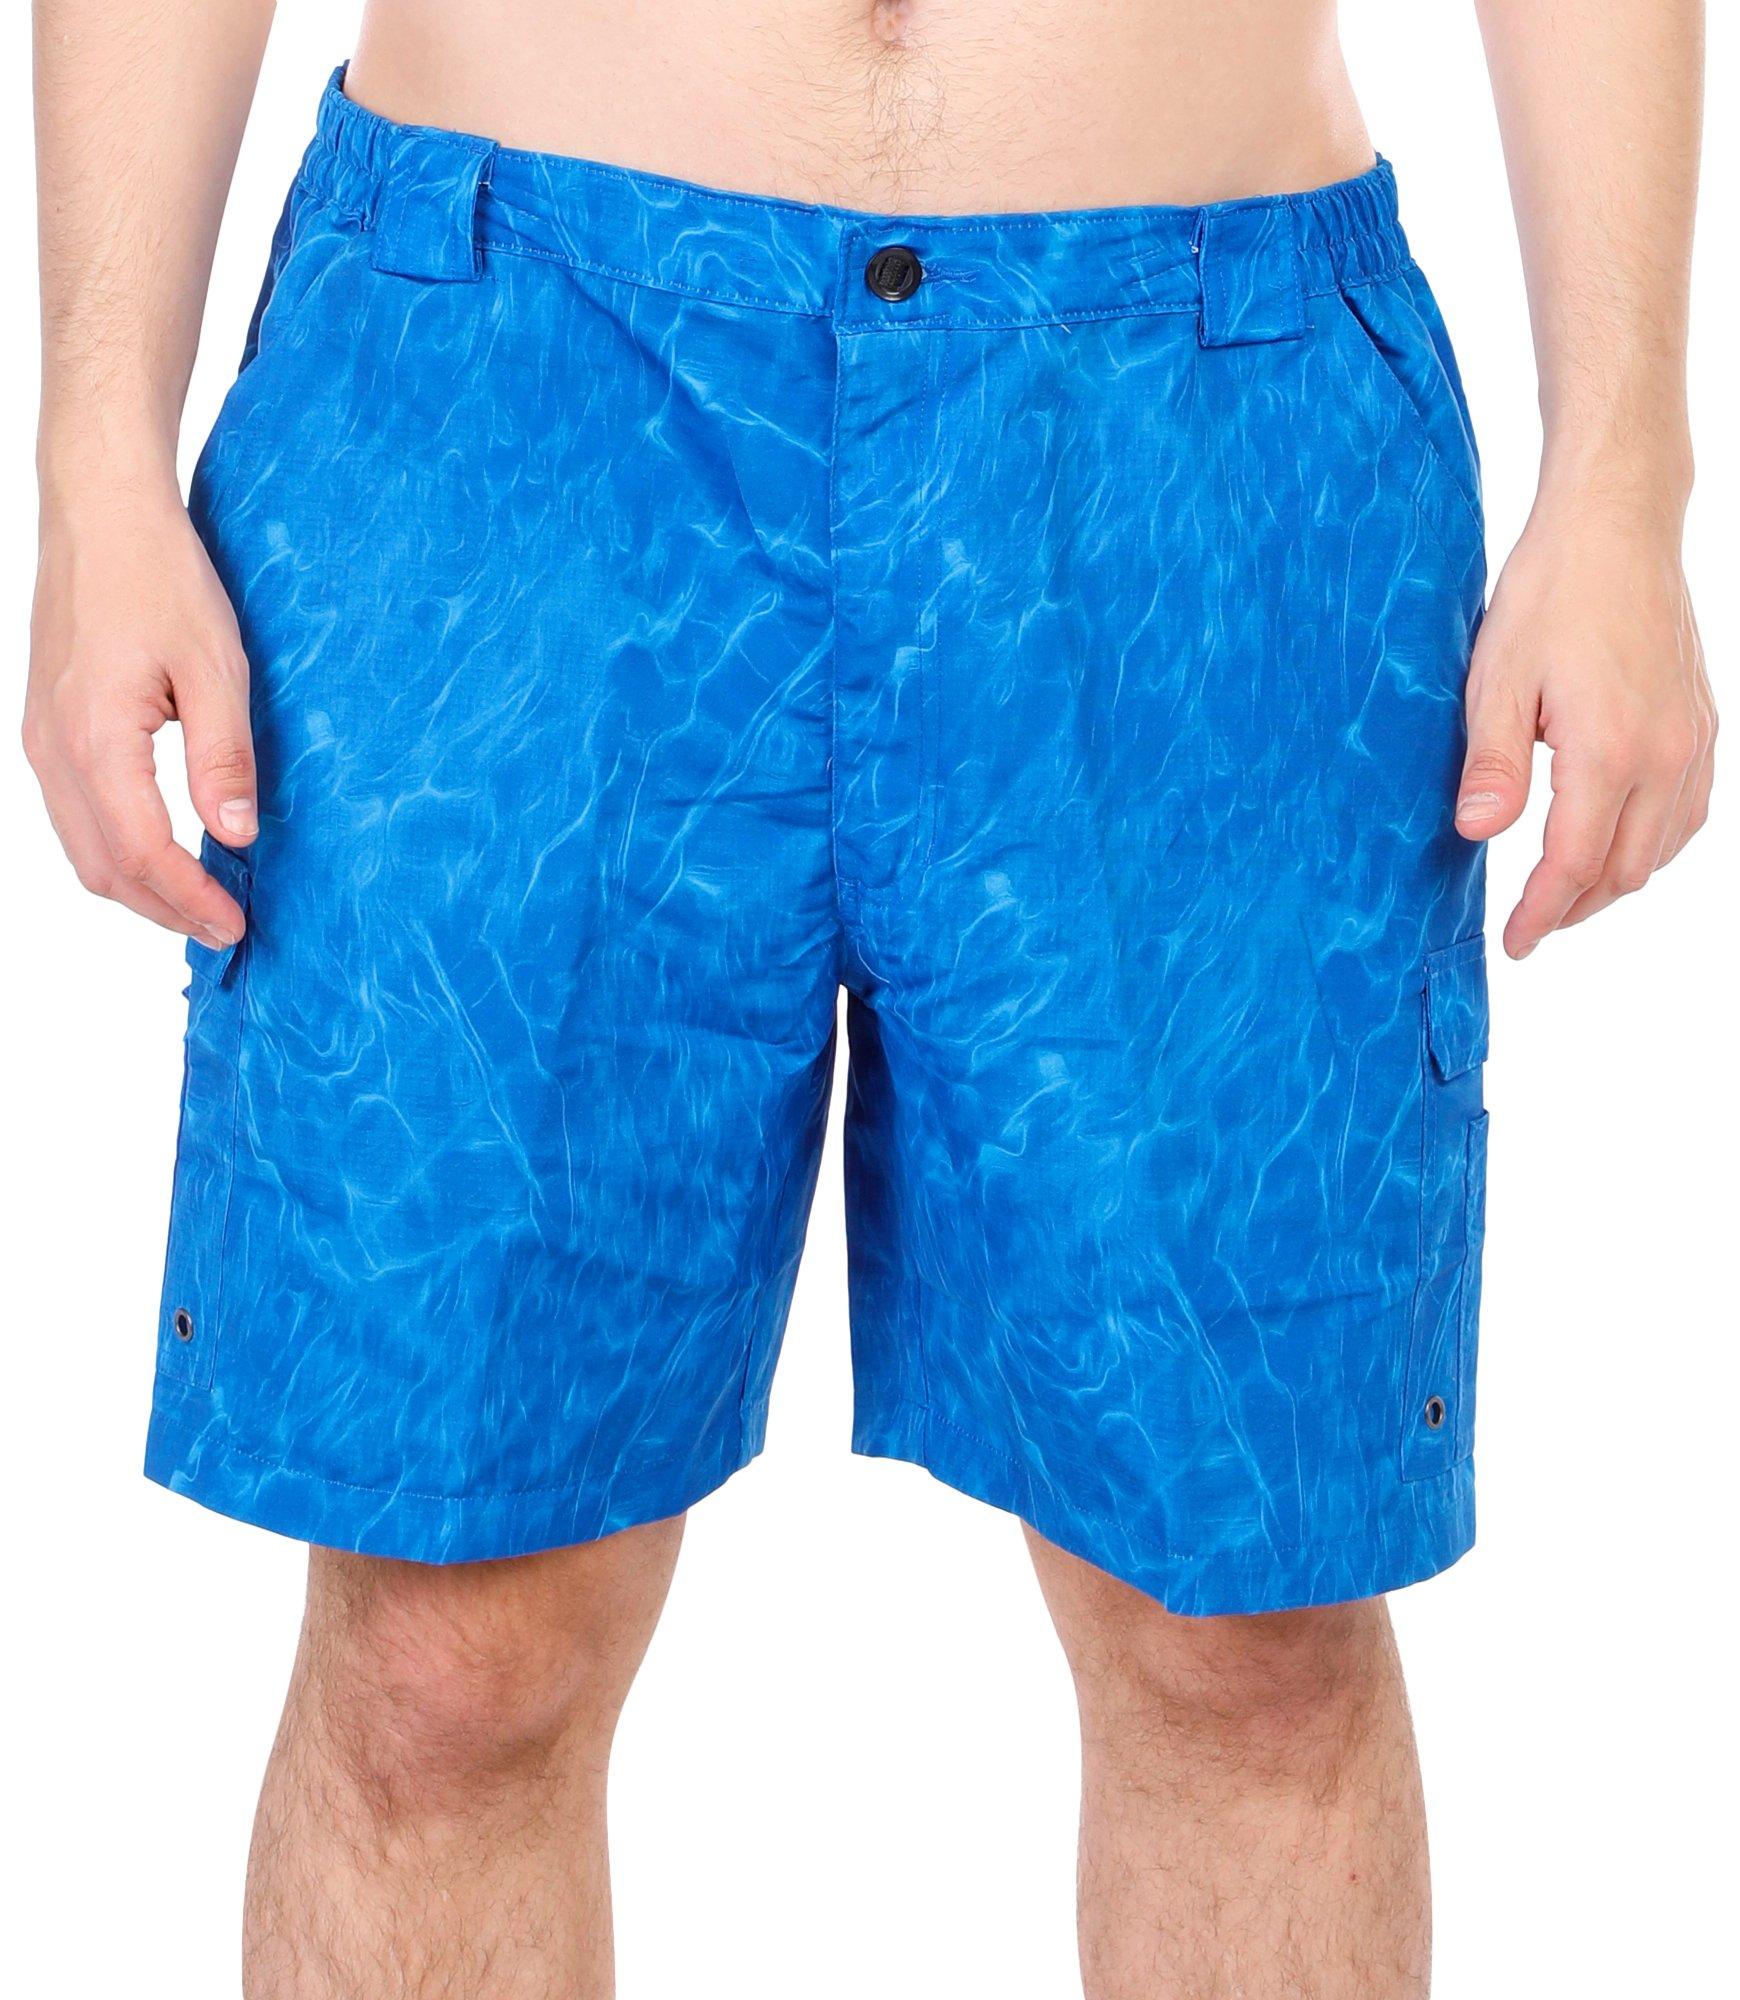 Reel Legends Mens Solid Sandbar Shorts - Grey - 32W